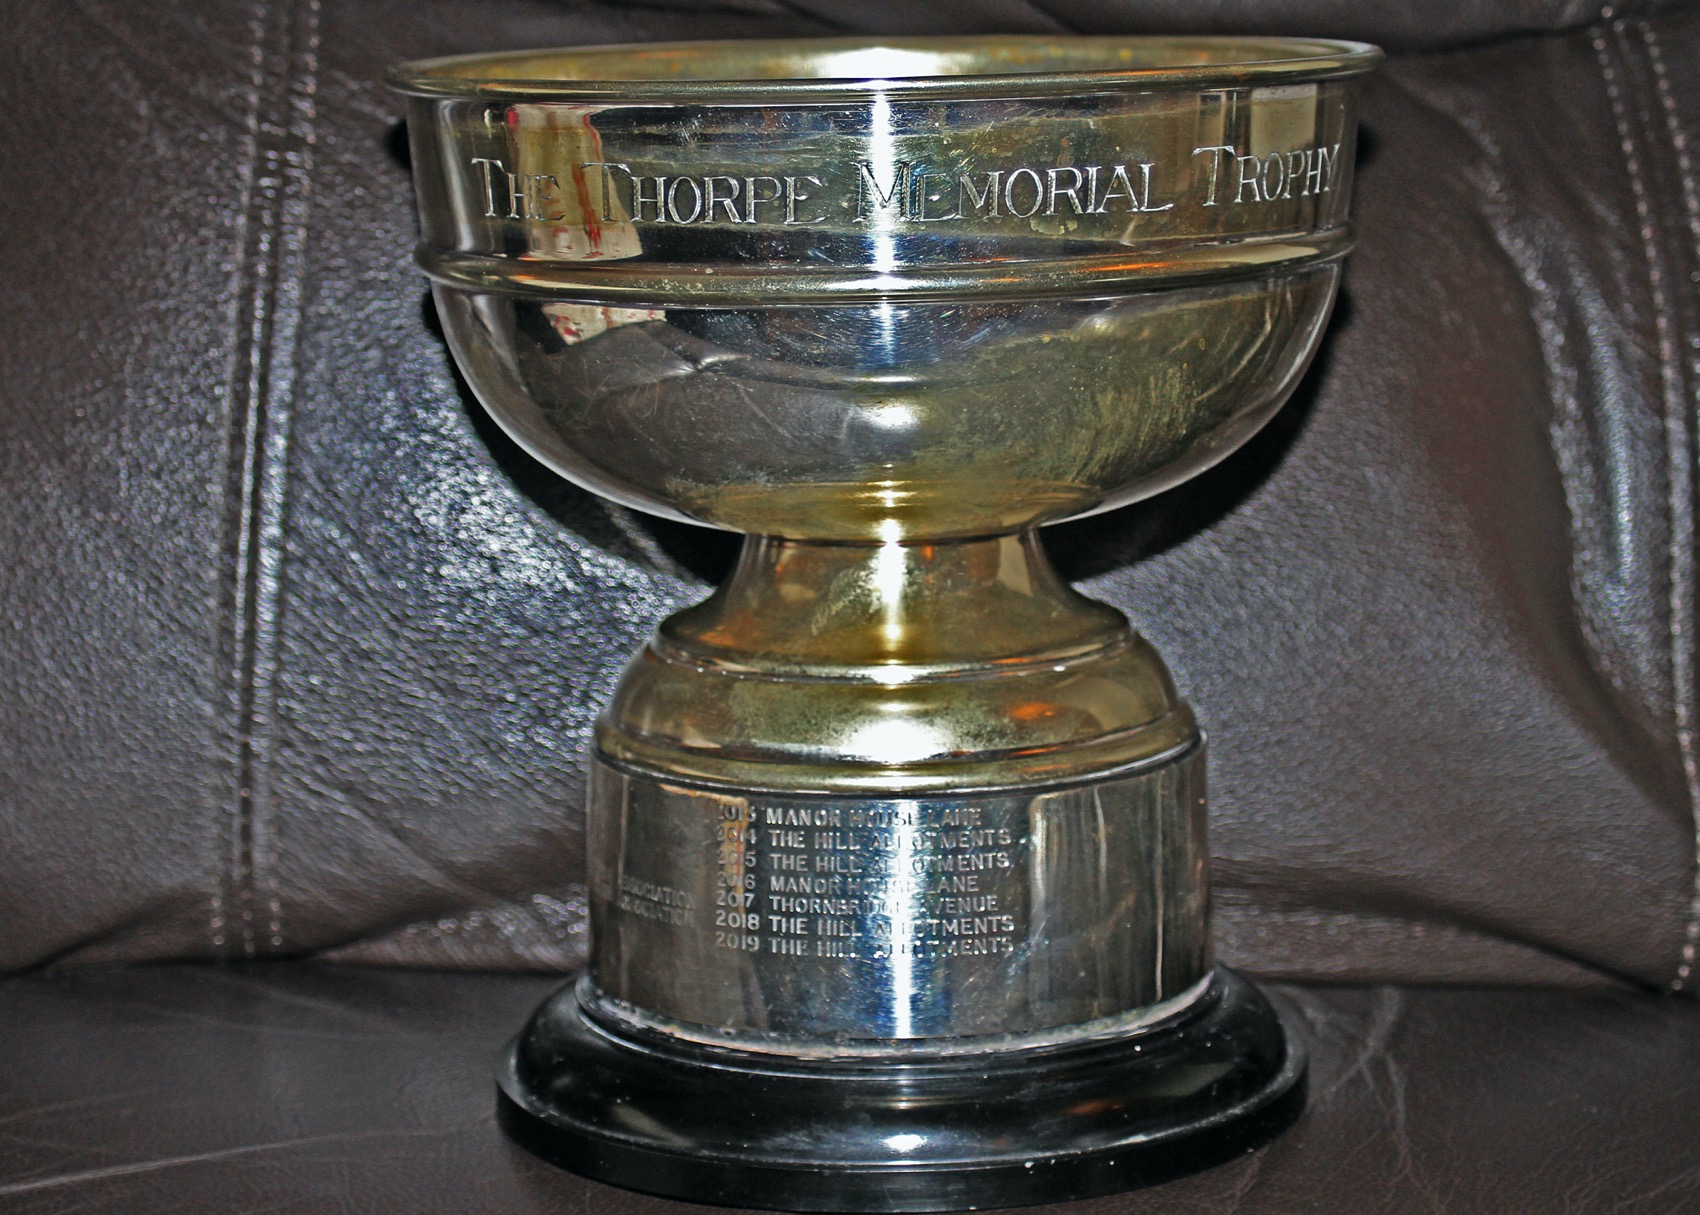 Thorpe Trophy